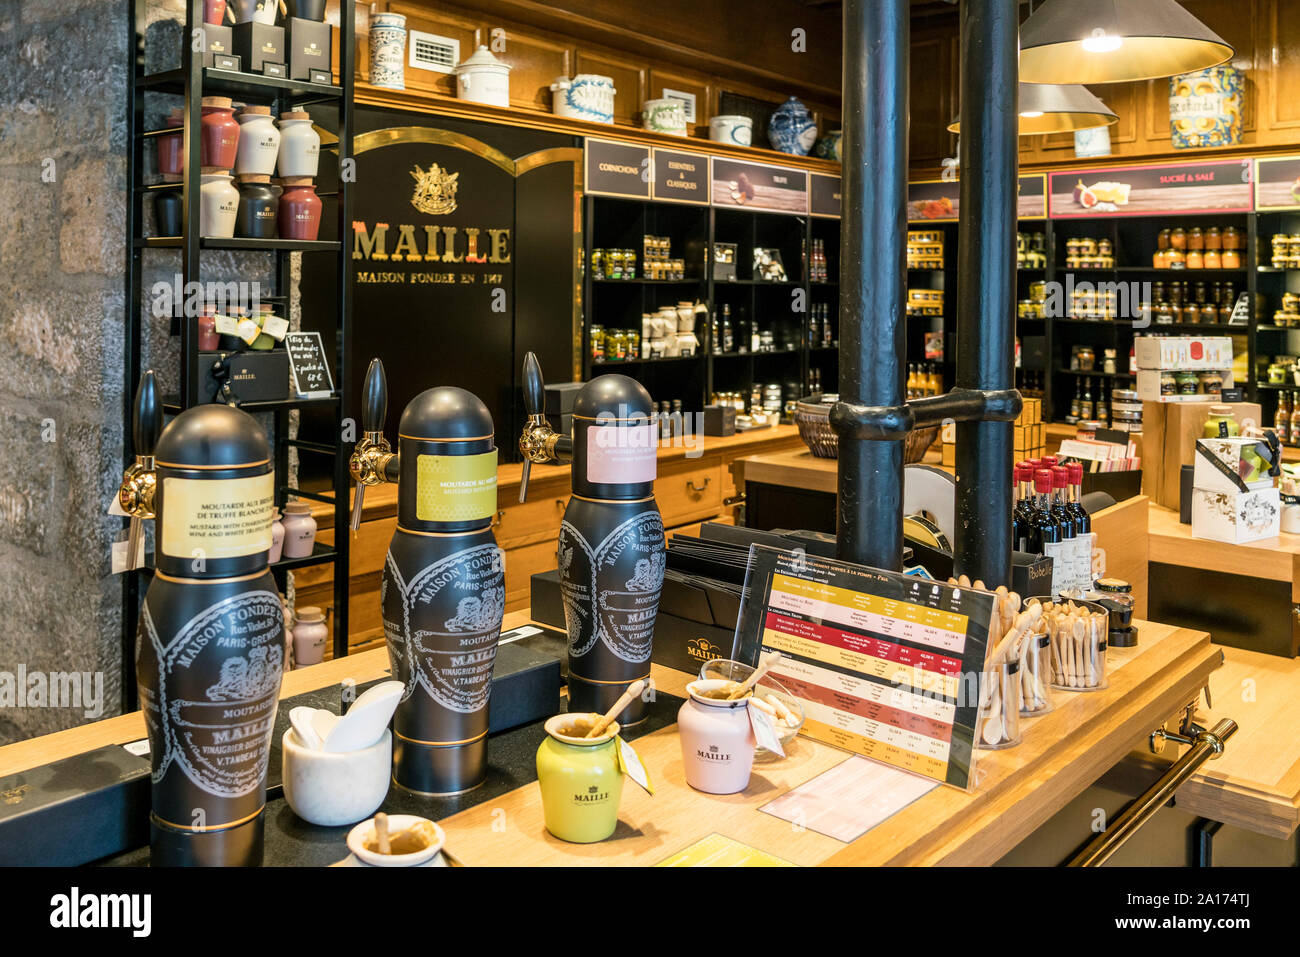 Maille mustard shop, Dijon, Côte-d'Or departement, Burgundy, France Stock Photo